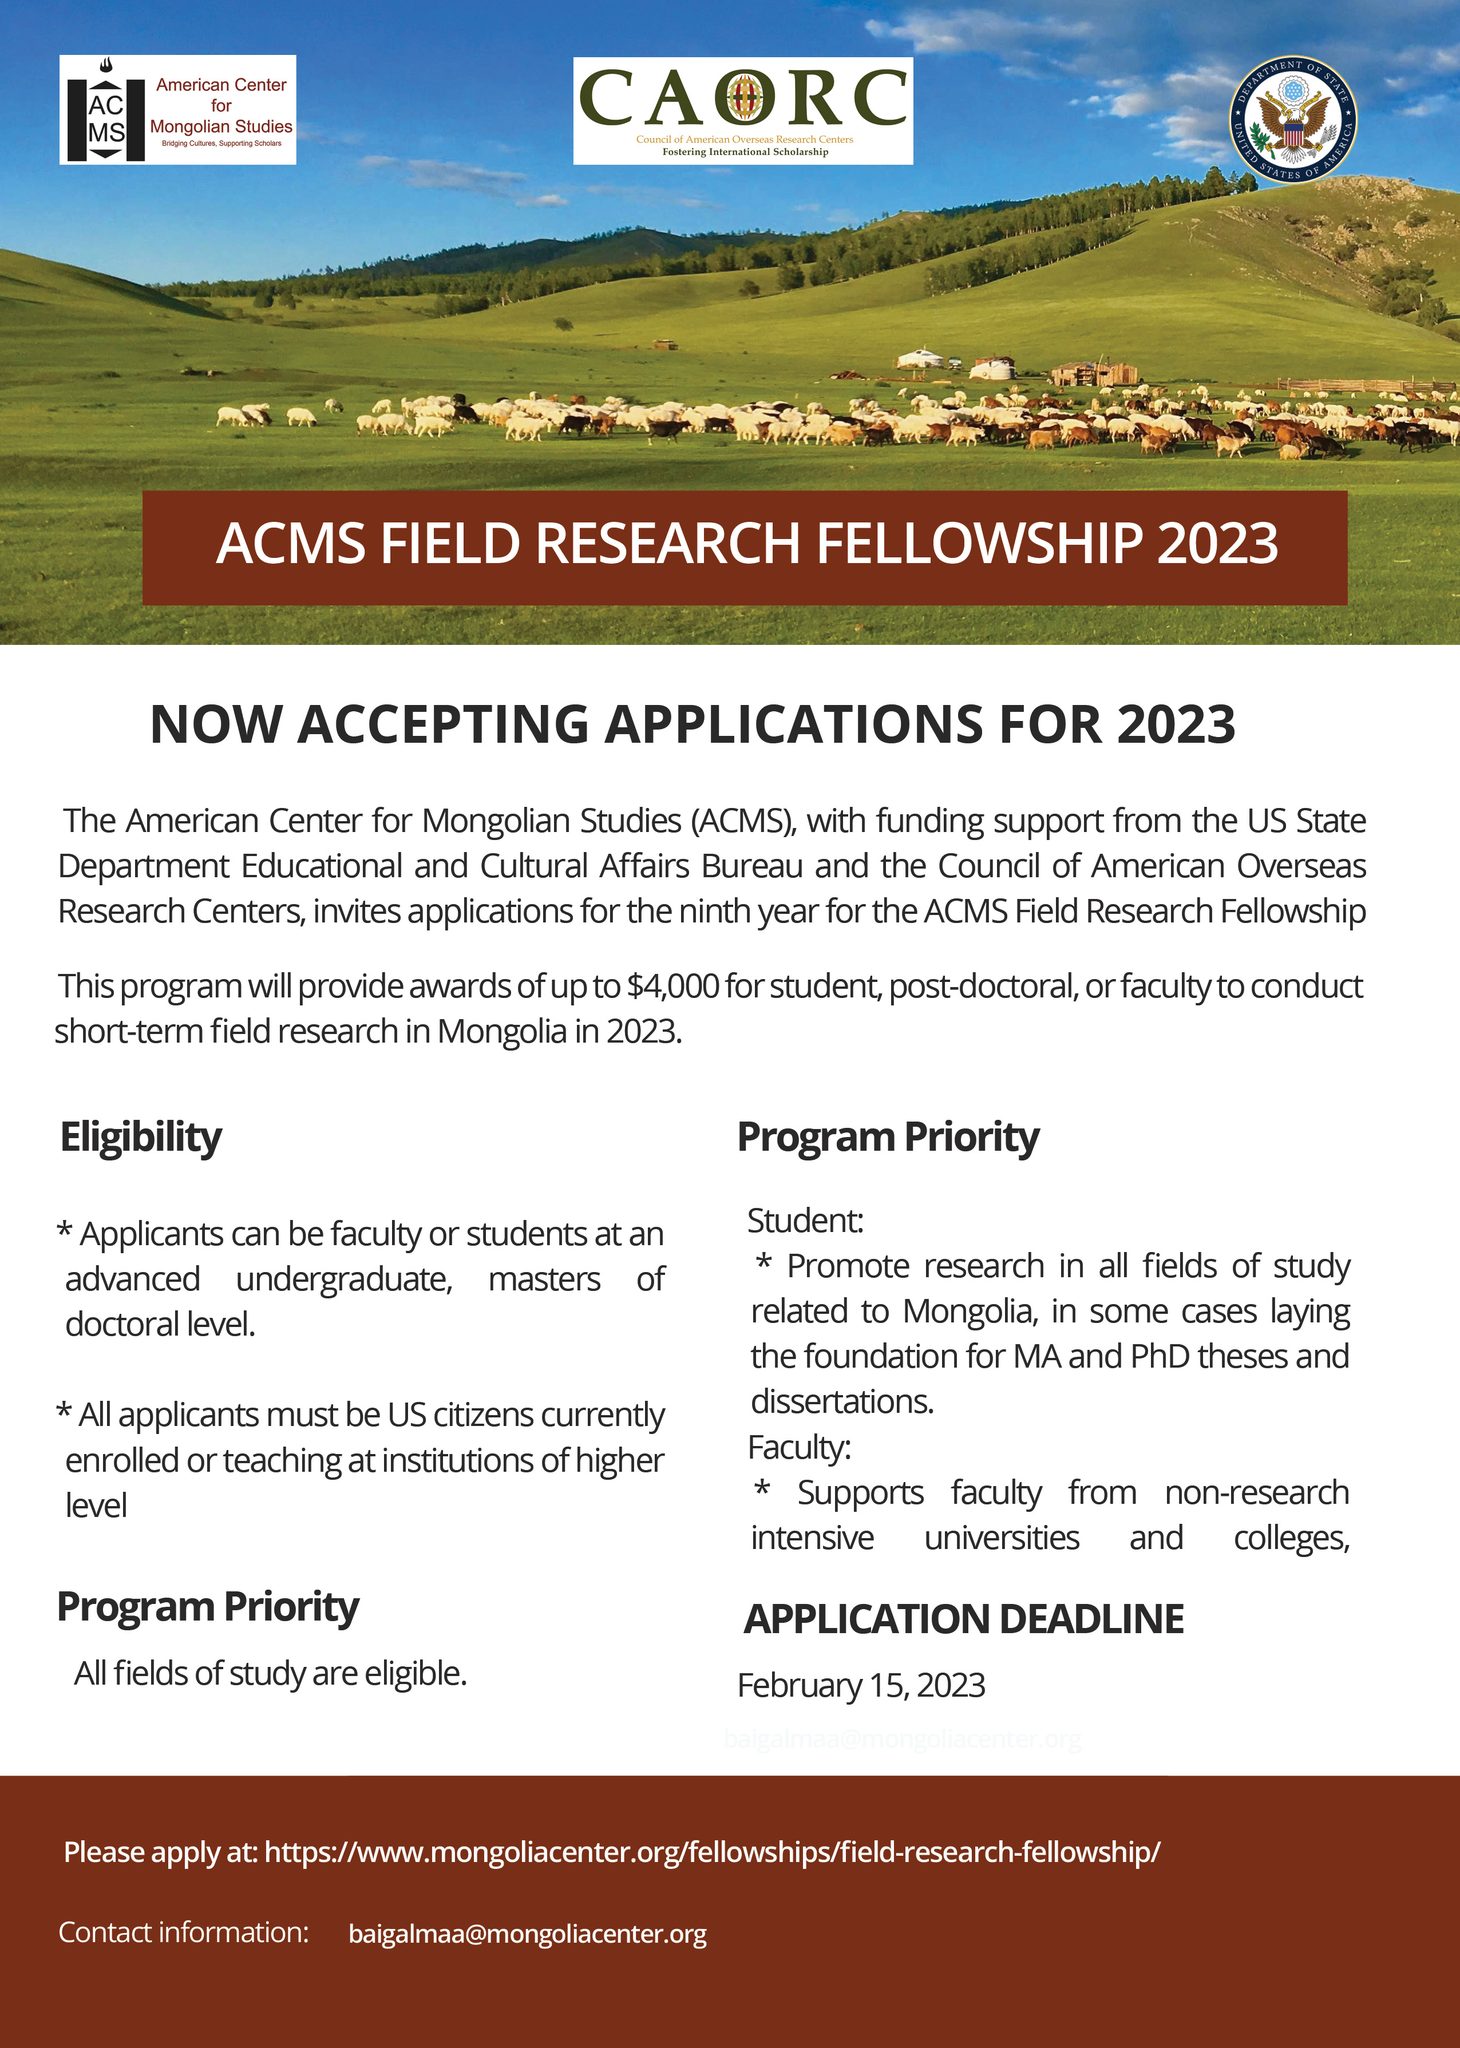 ACMS Mongolia Field Research Fellowship